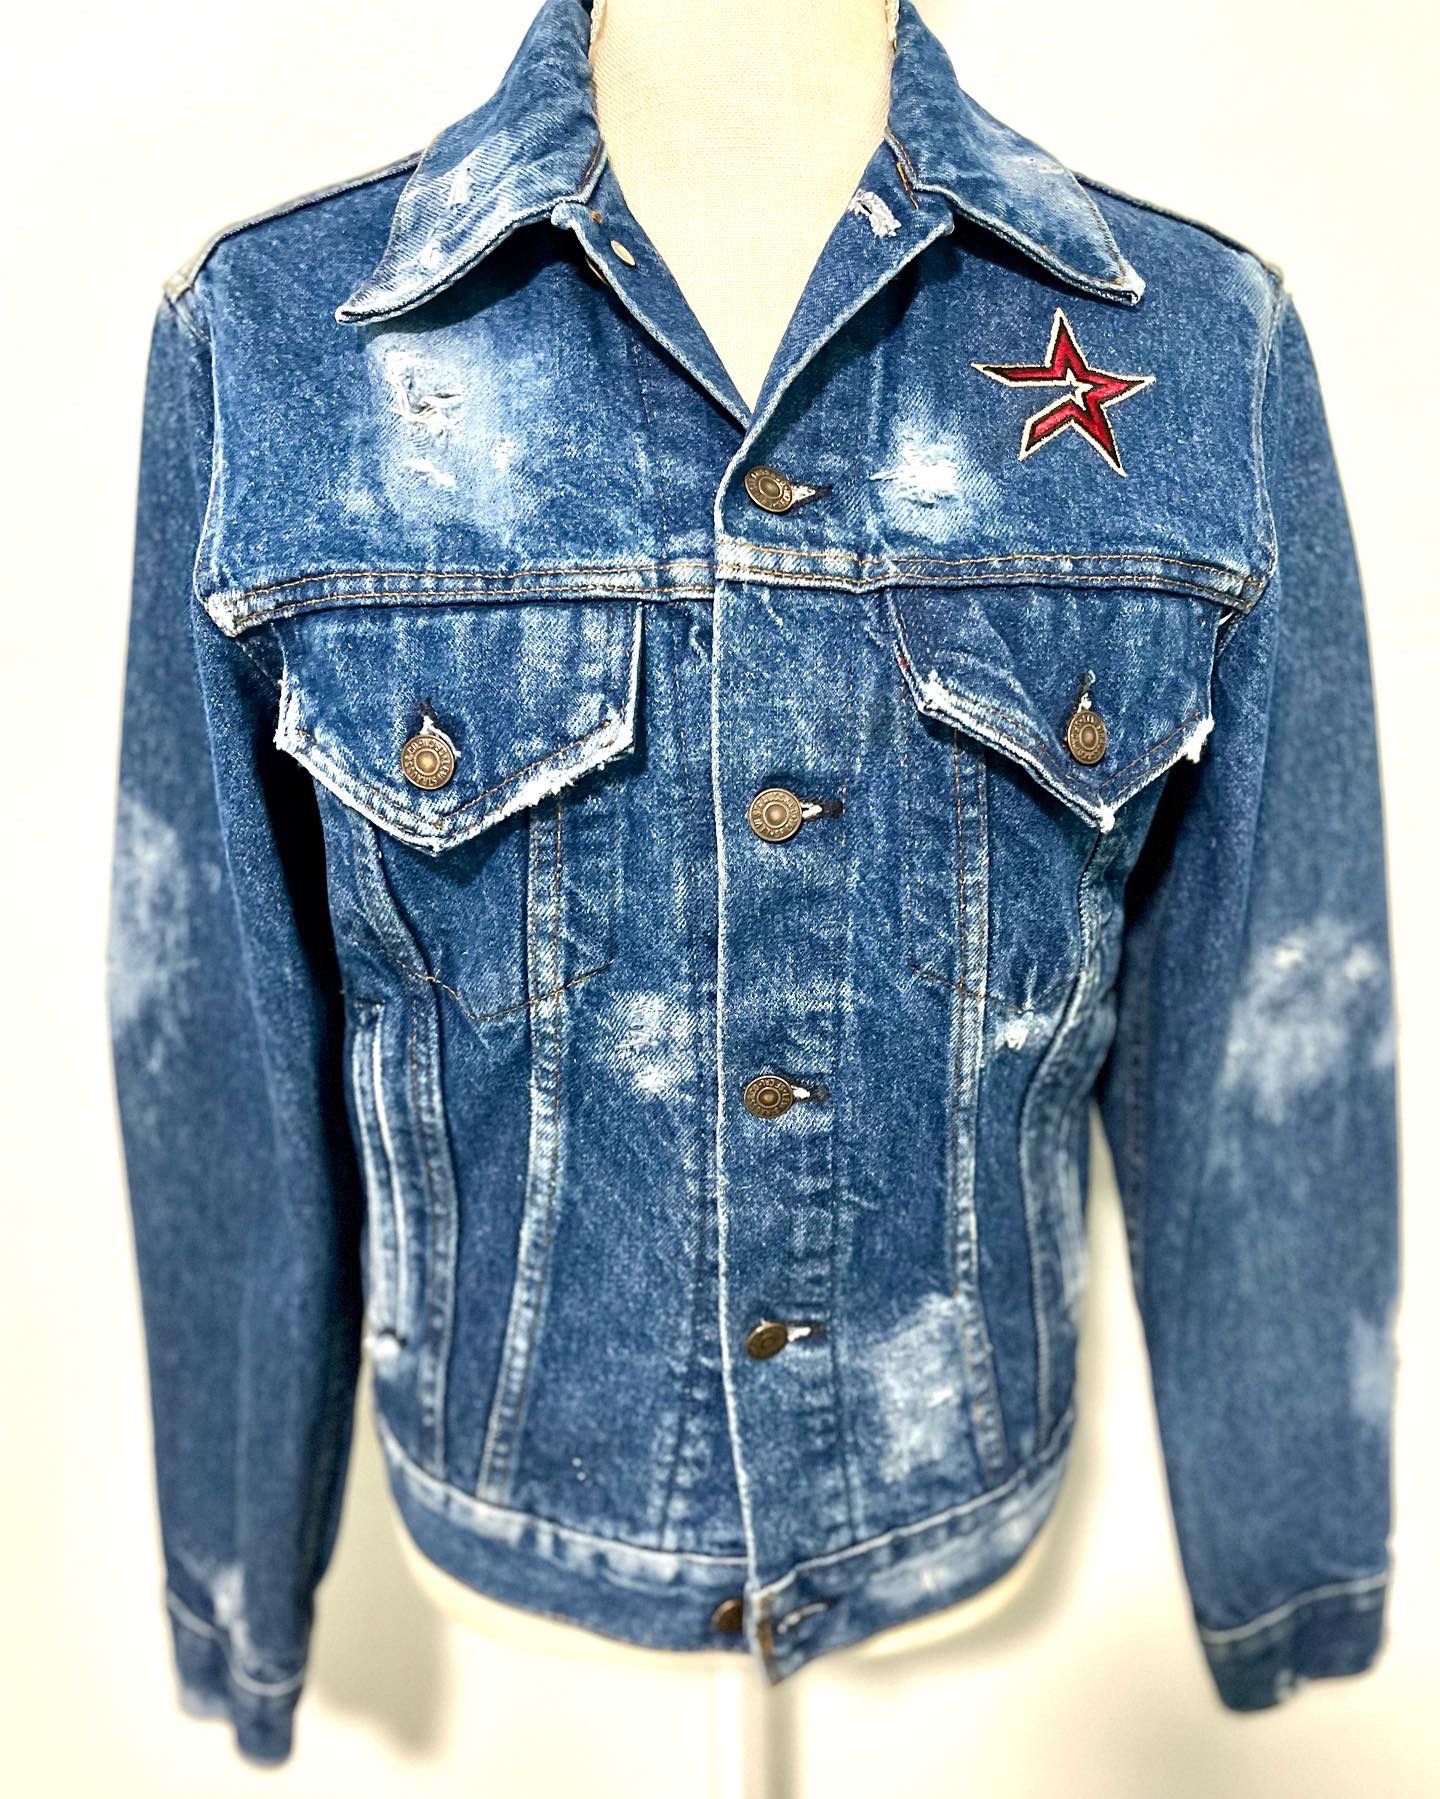 Vintage Denim Jacket  (ASTROS)    Levi’s 